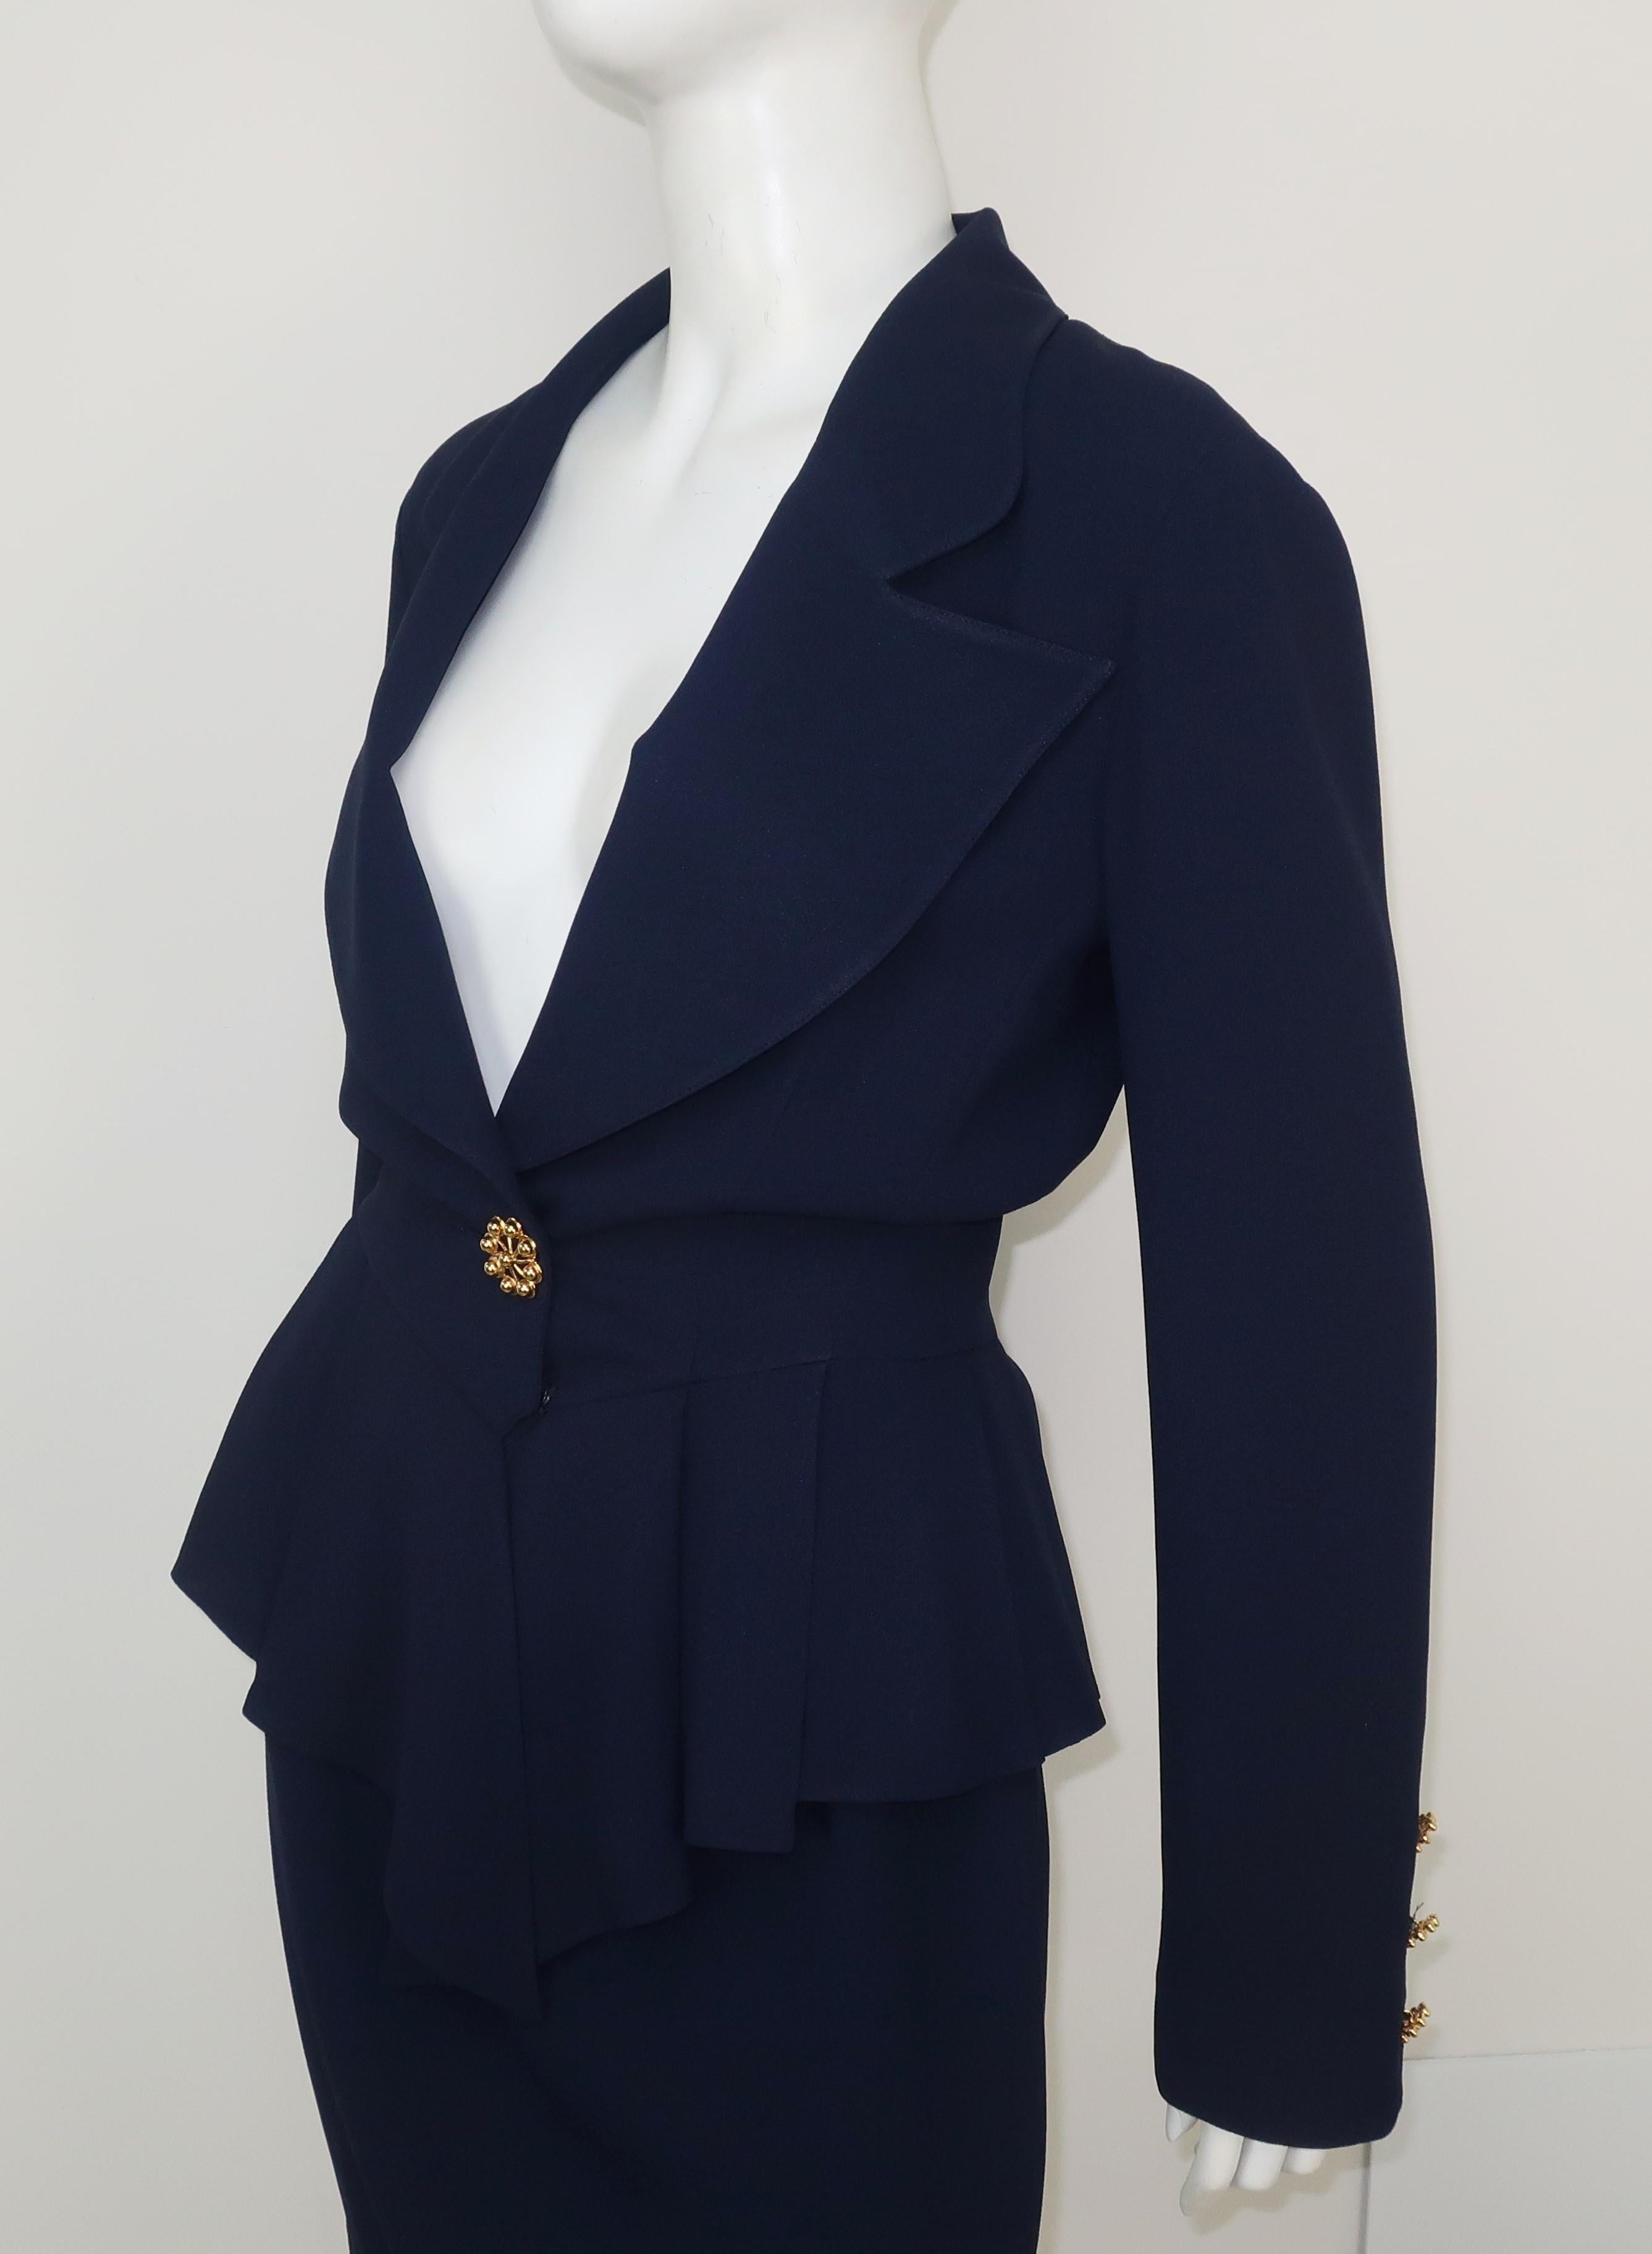 Black Karl Lagerfeld Navy Blue Peplum Skirt Suit C.1990